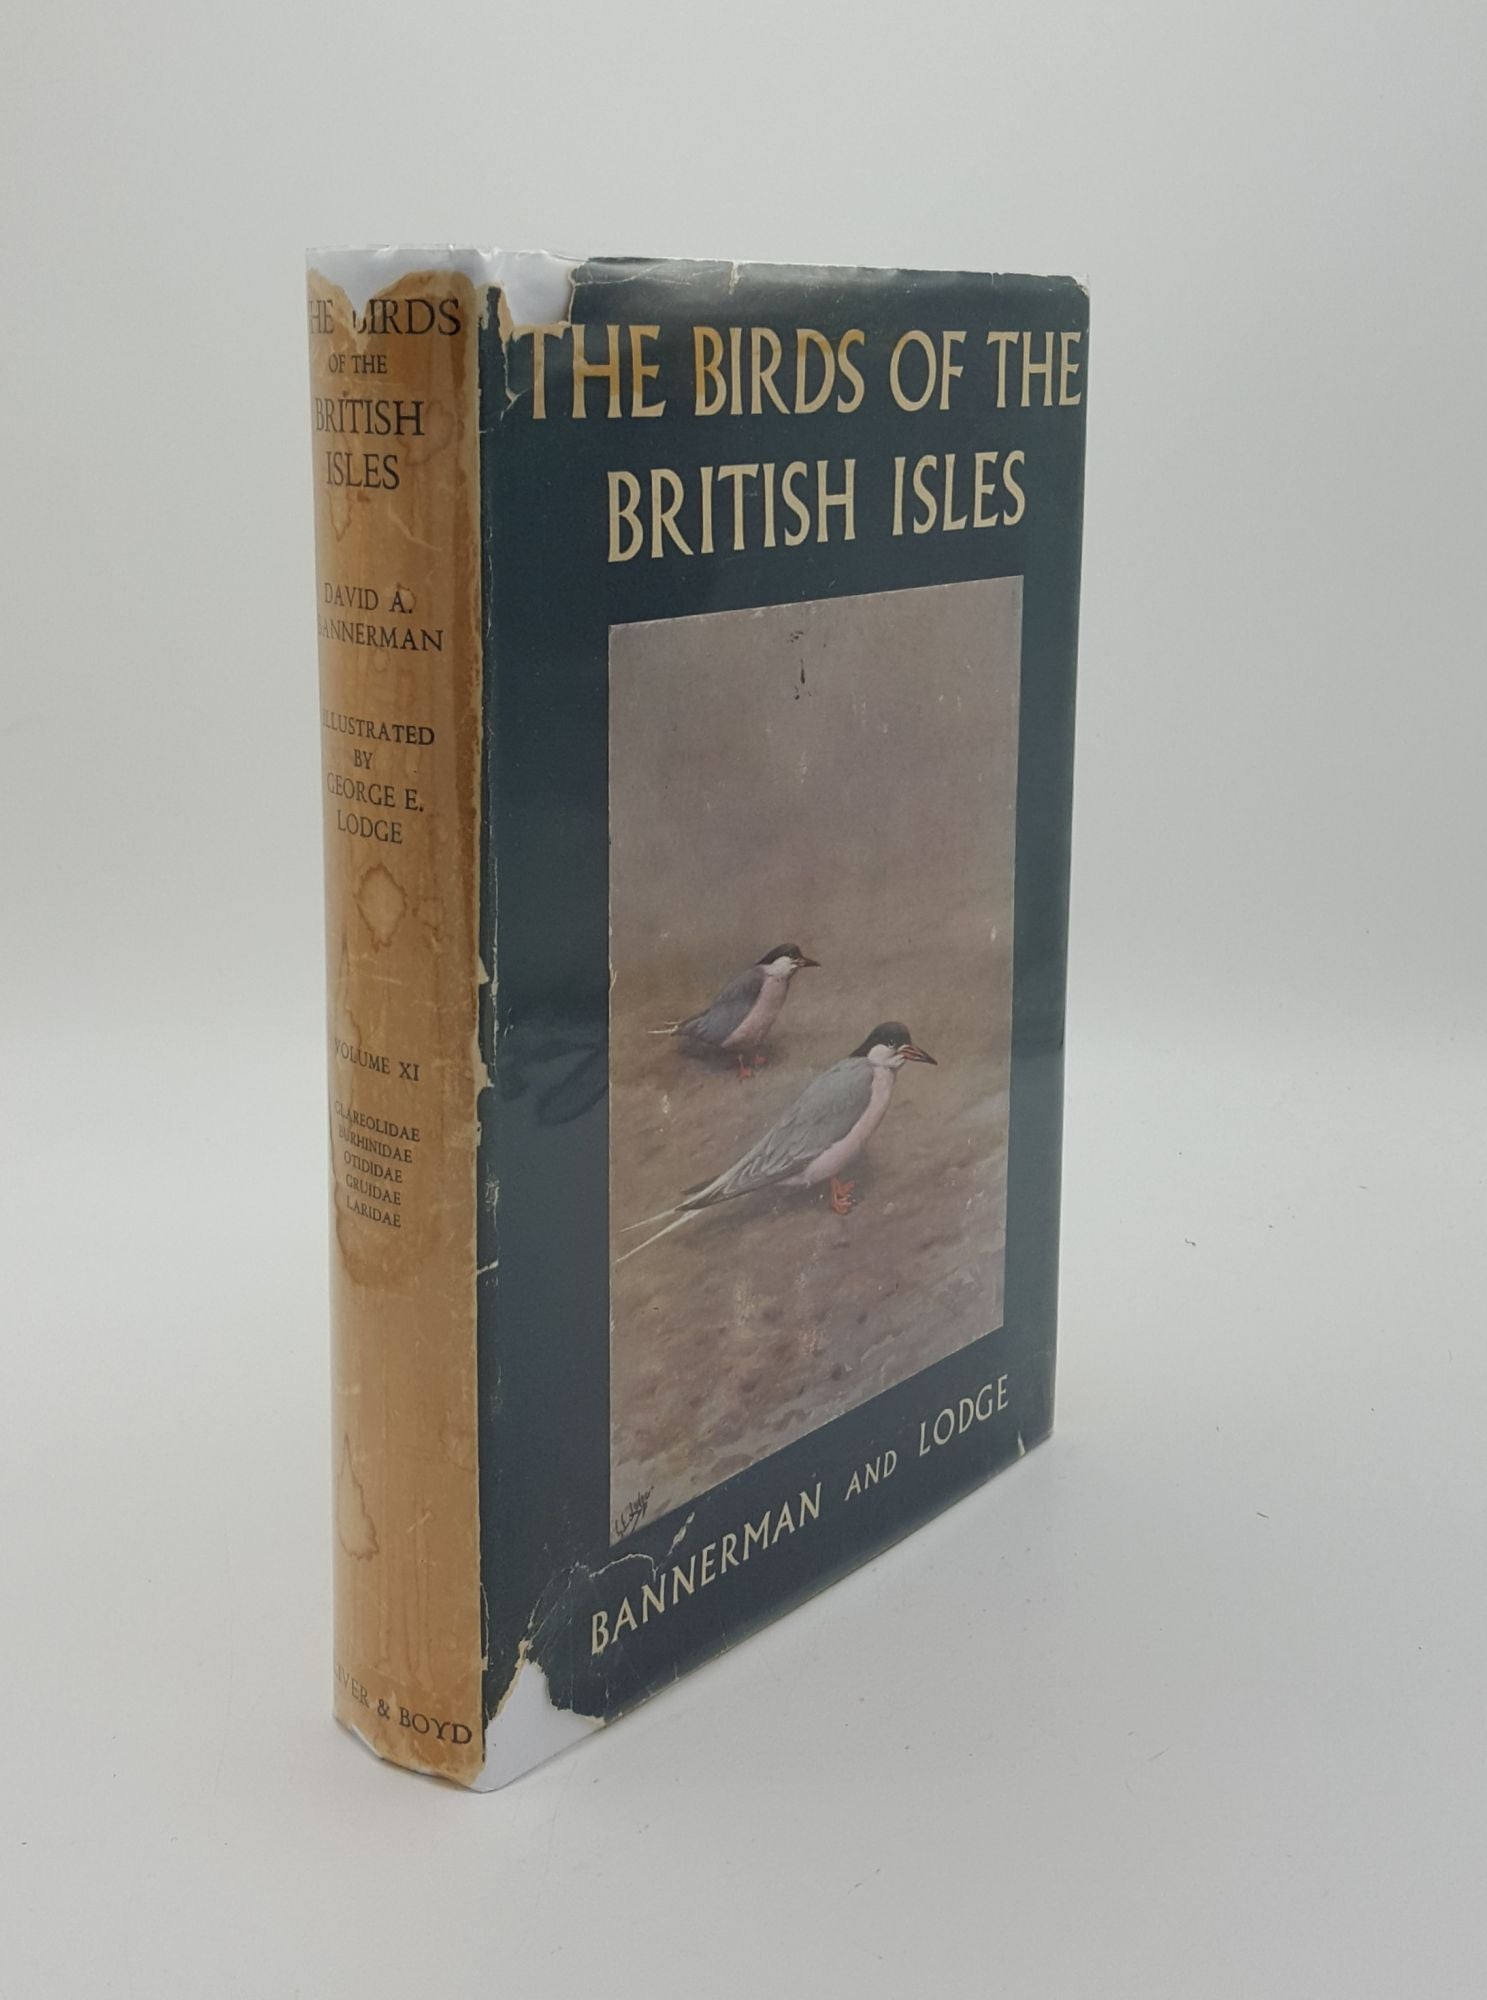 BANNERMAN David Armitage, LODGE George E. - The Birds of the British Isles Volume XI